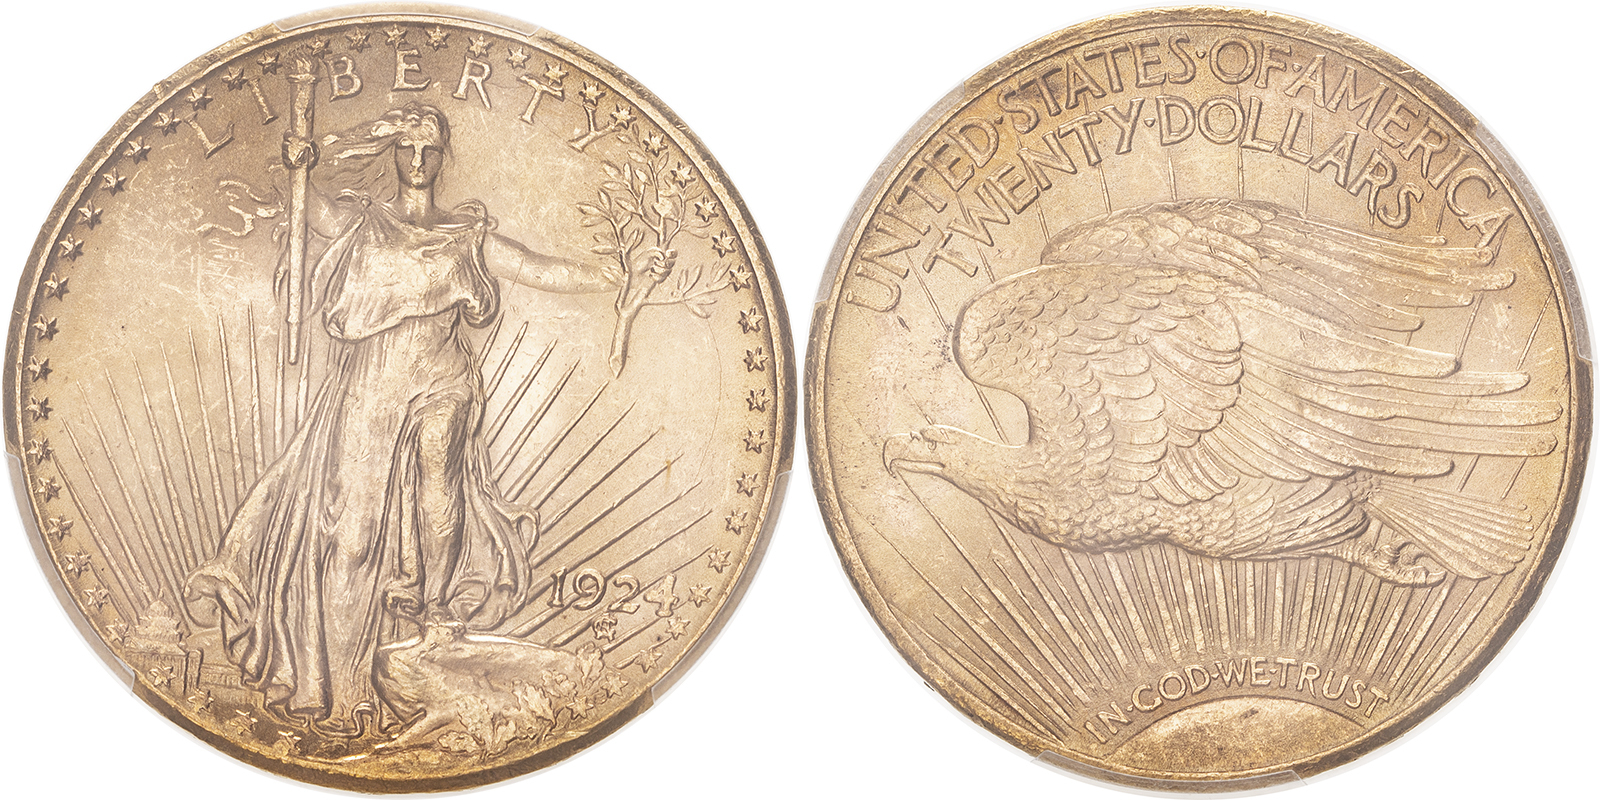 Lot 134: United States 1924 Gold 20 Dollars Saint-Gaudens; Double Eagle PCGS MS65 #38822340 (AGW=0.9674 oz.)